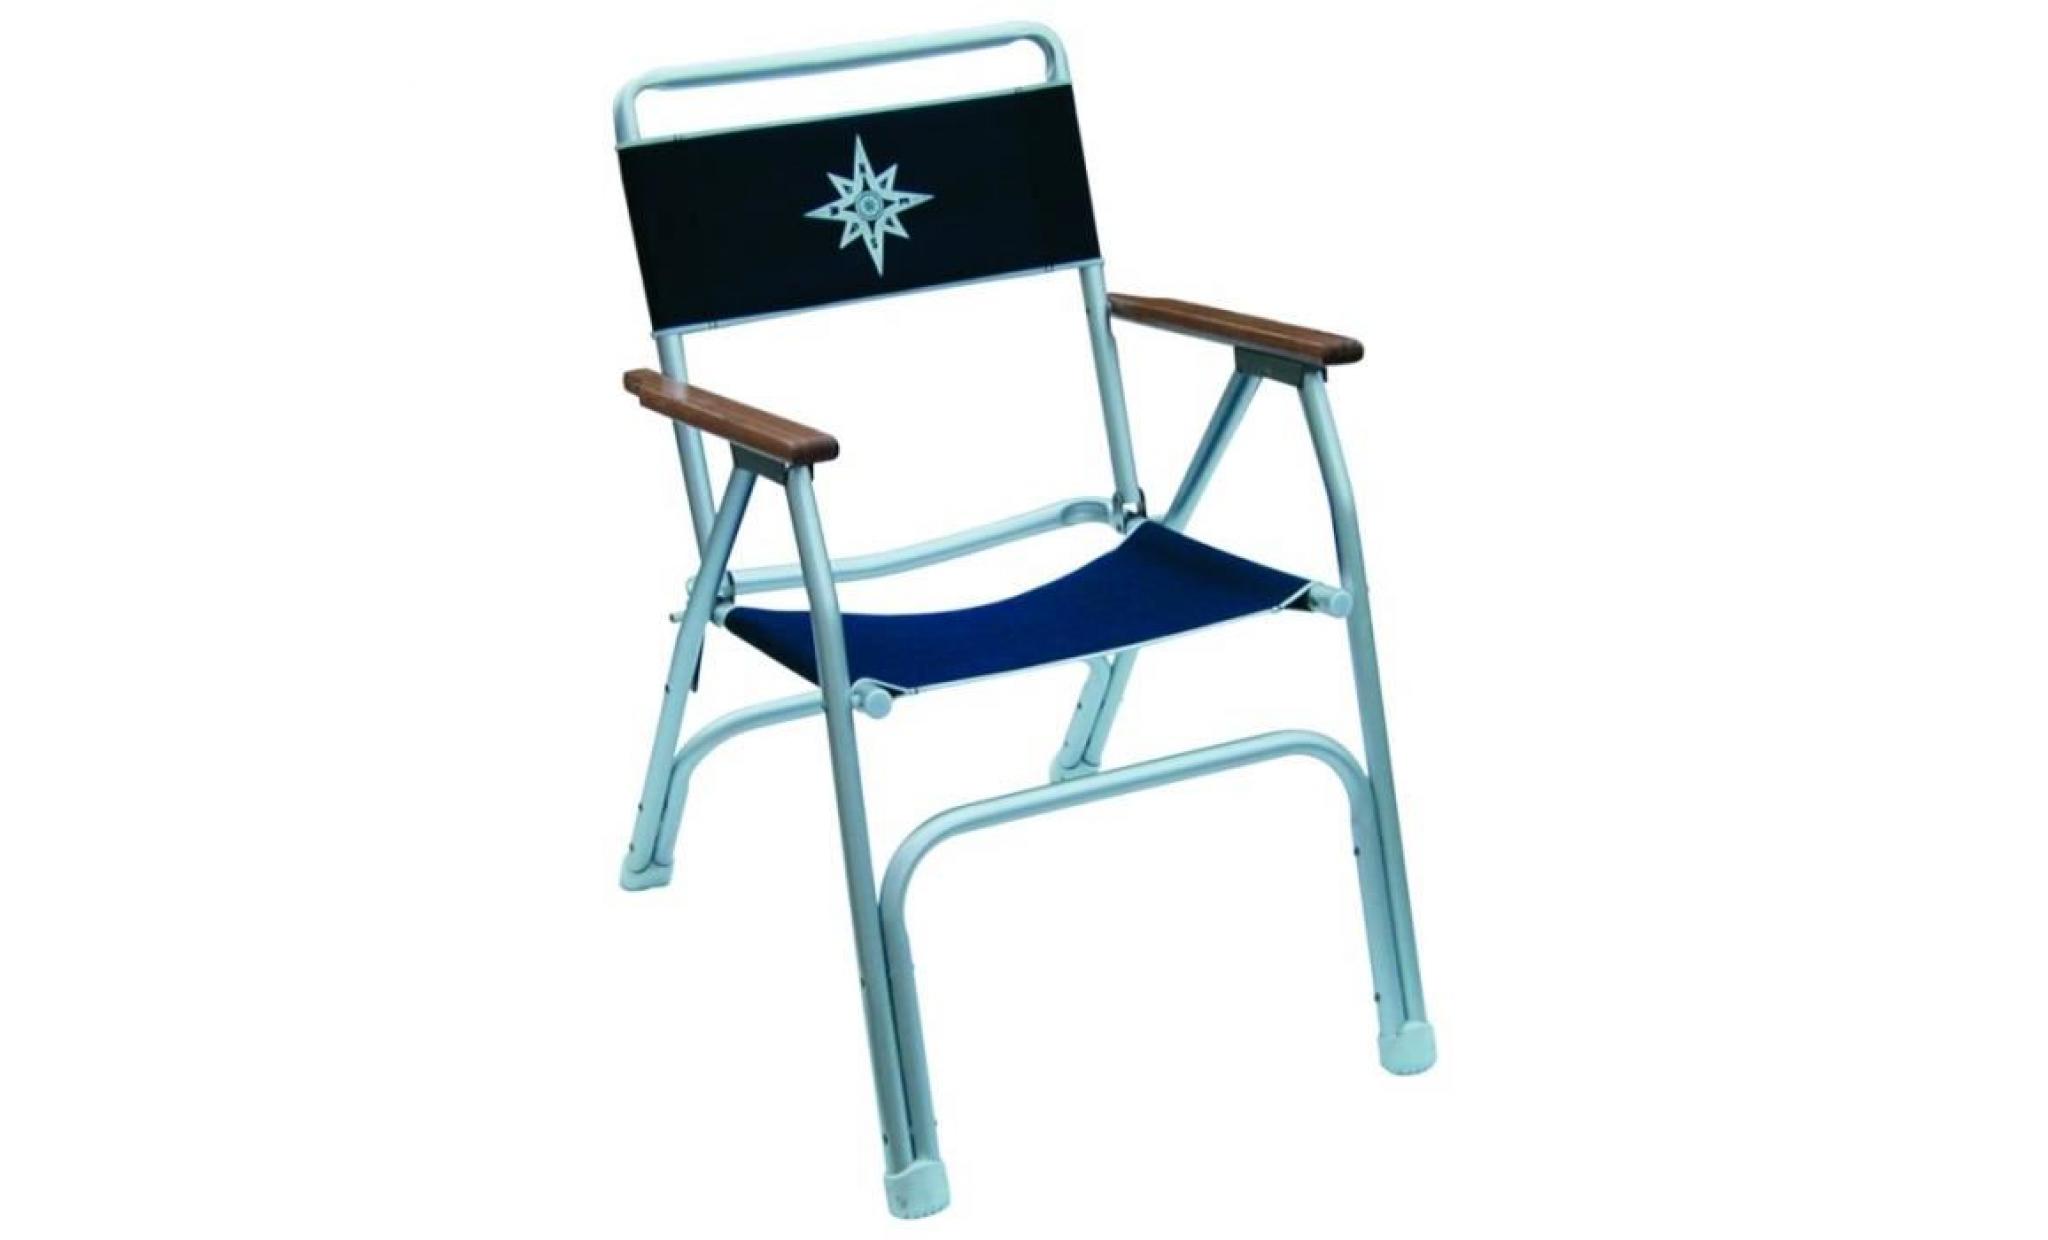 euromarine fauteuil bleu accoud bois